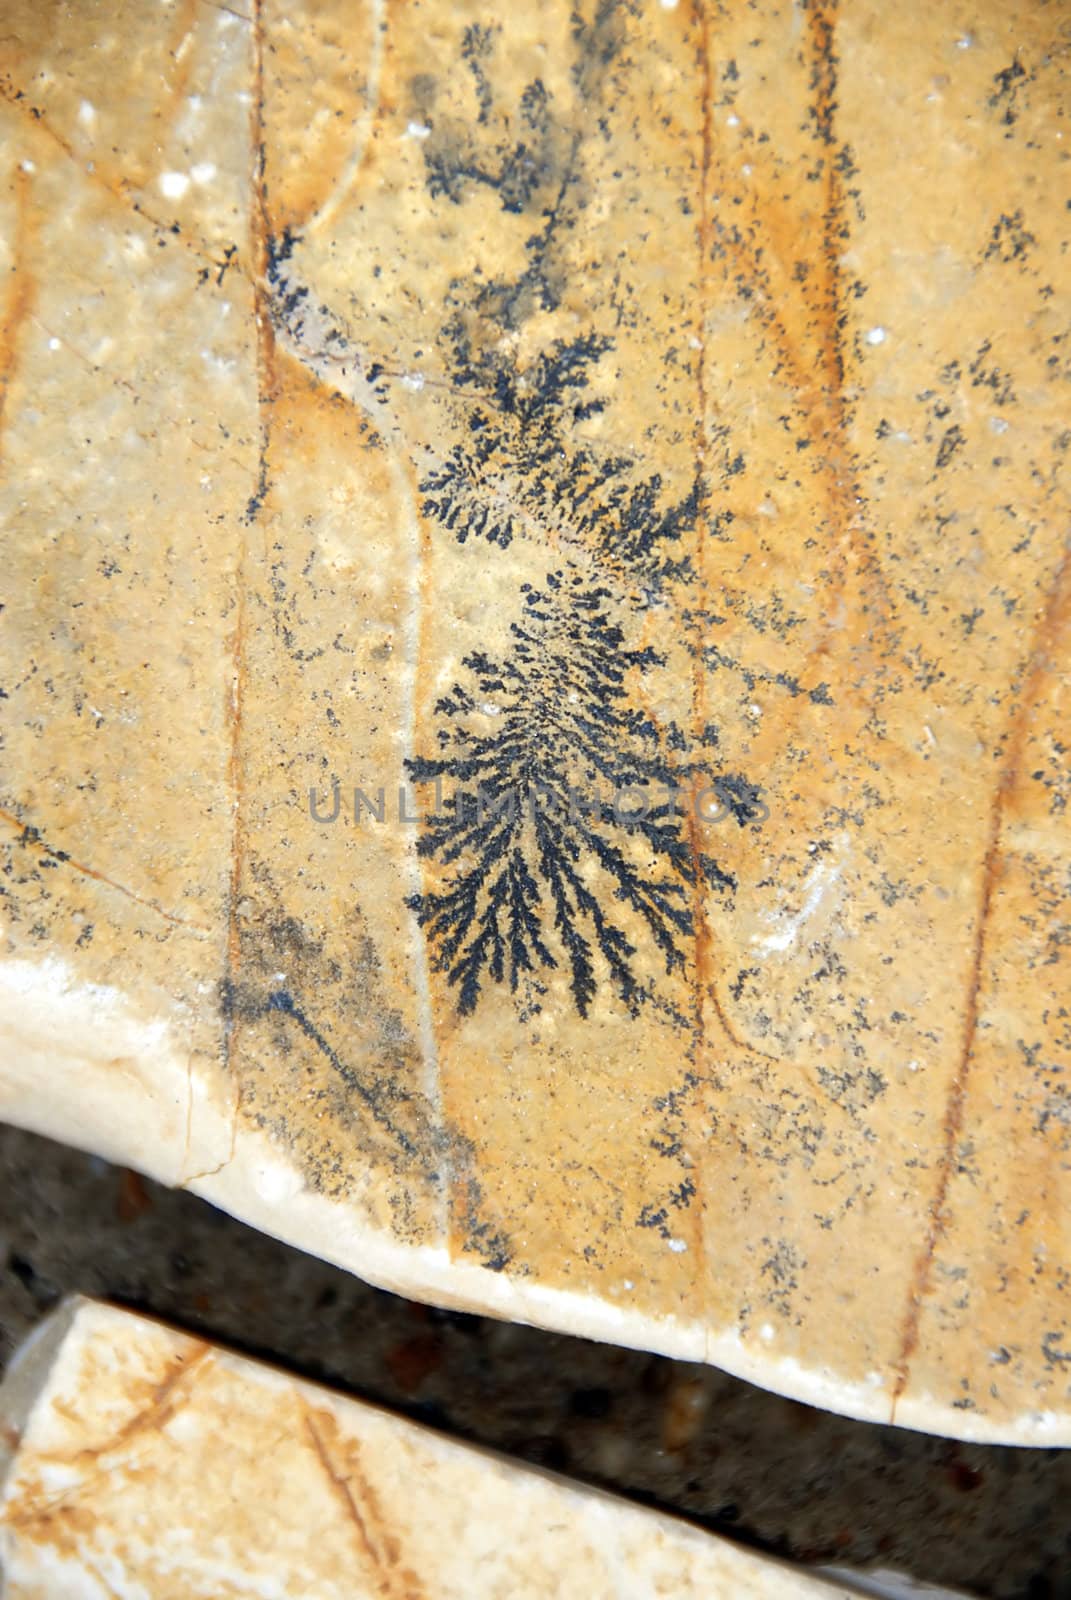 botanical black fossil design over yellow flagstone